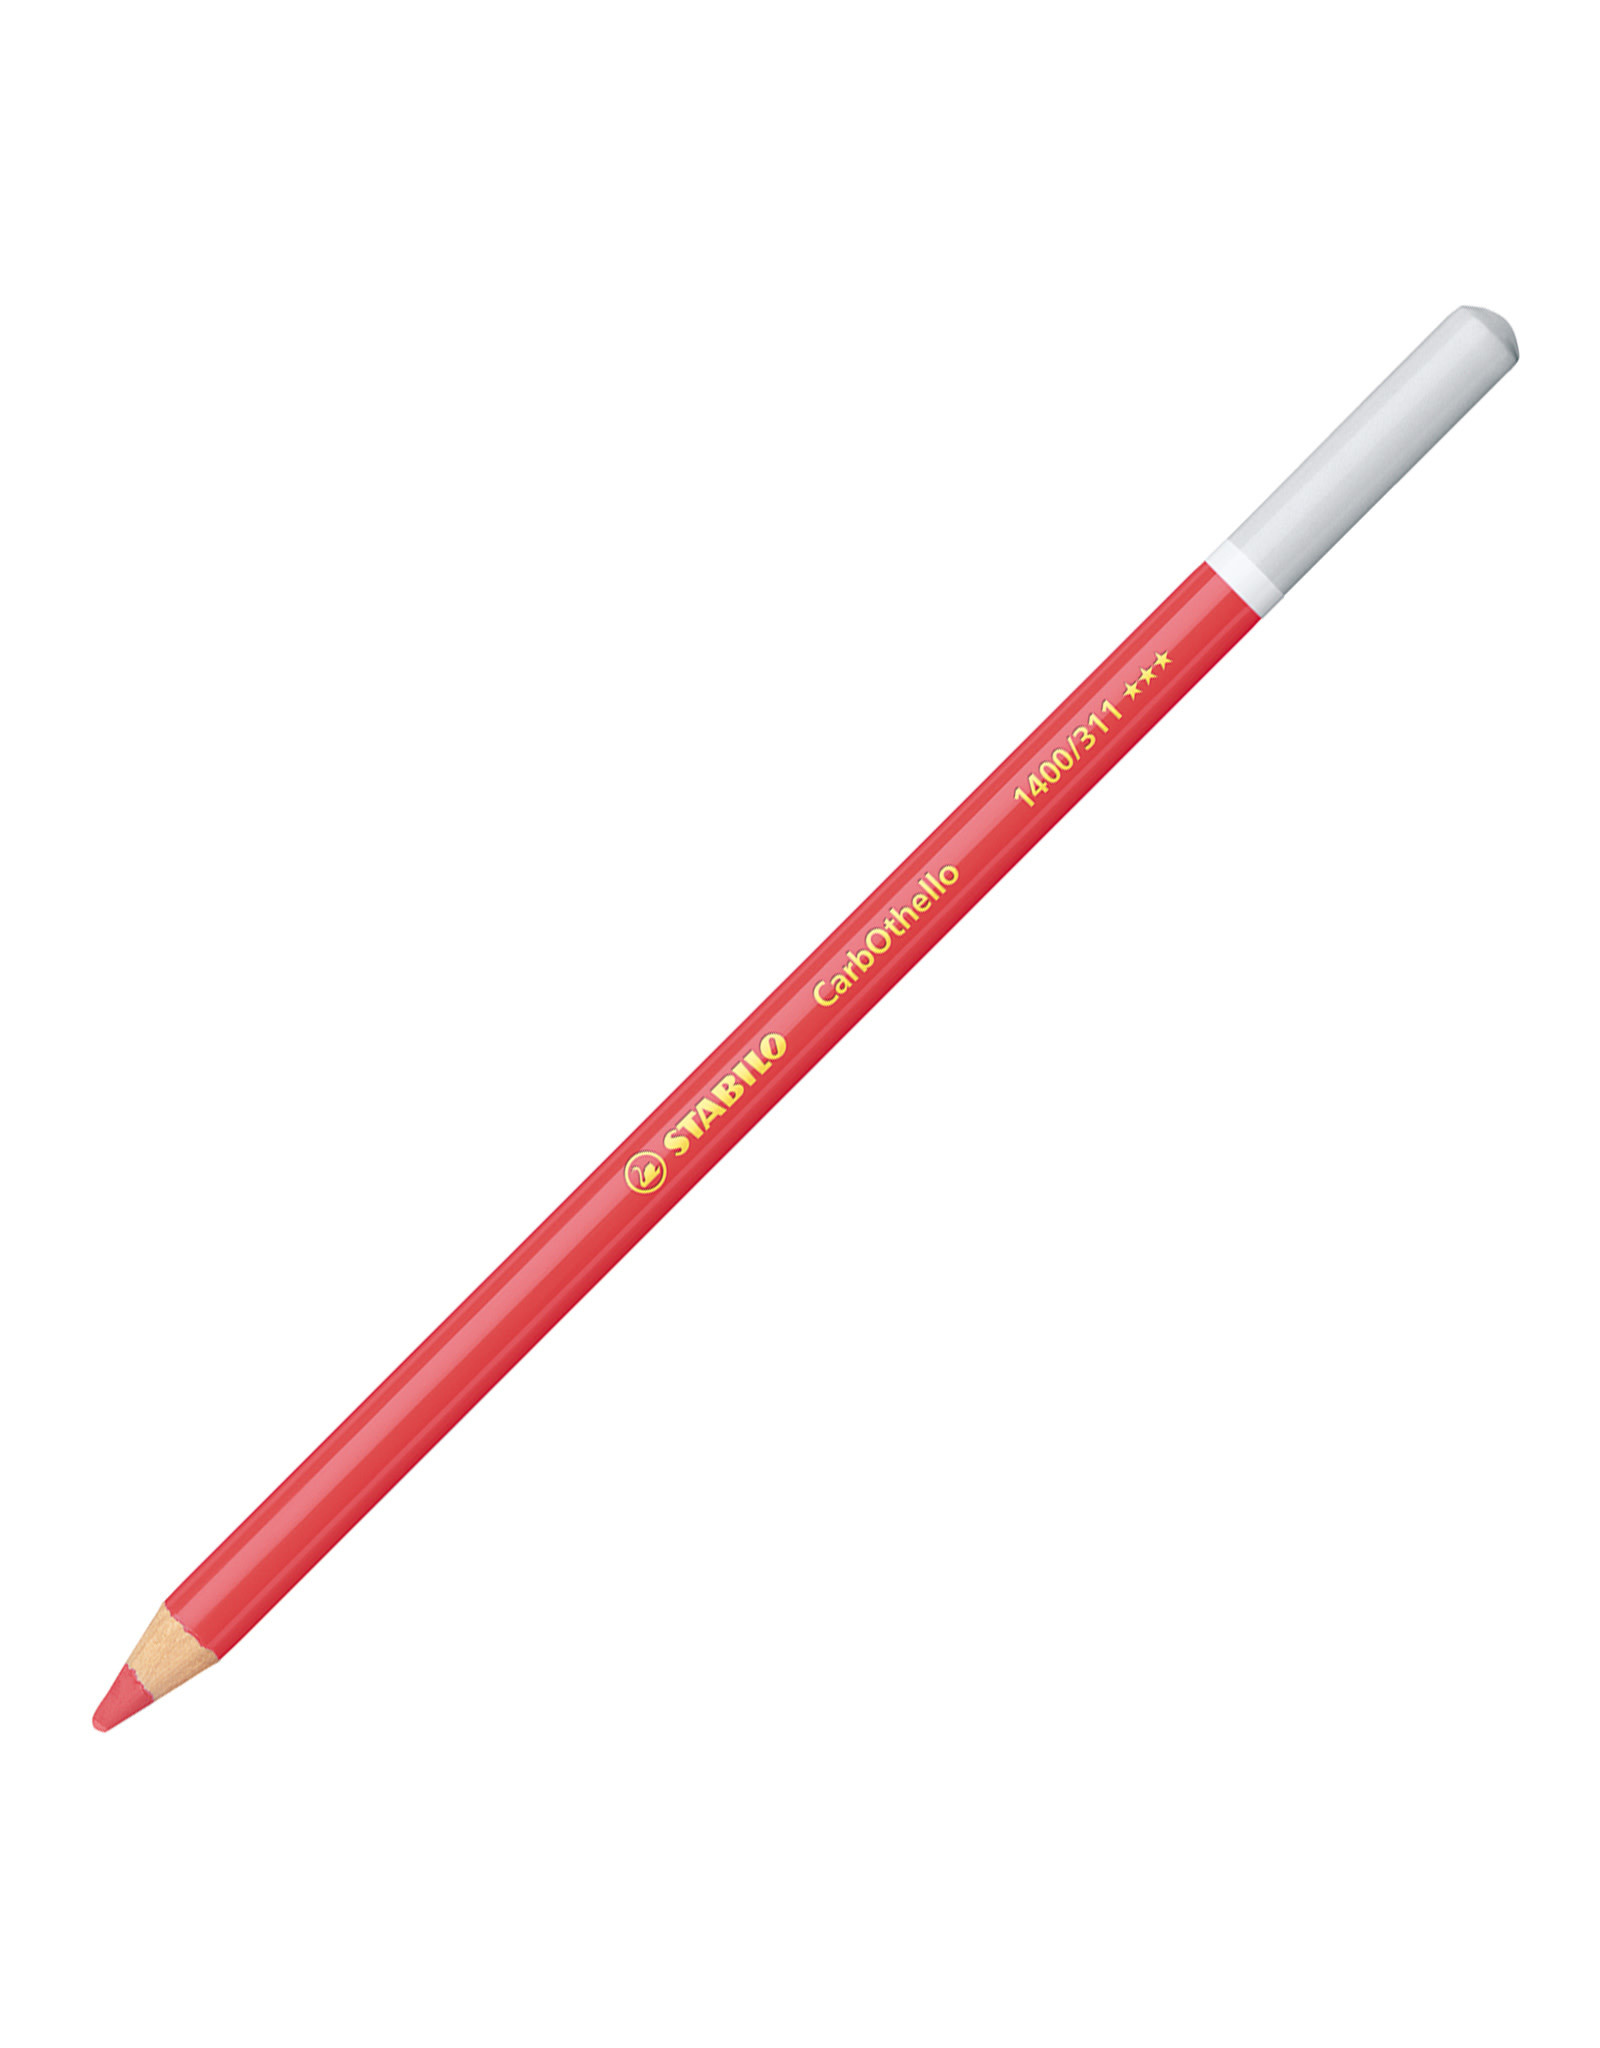 STABILO Stabilo Carbothello Pastel Pencil, Red Deep